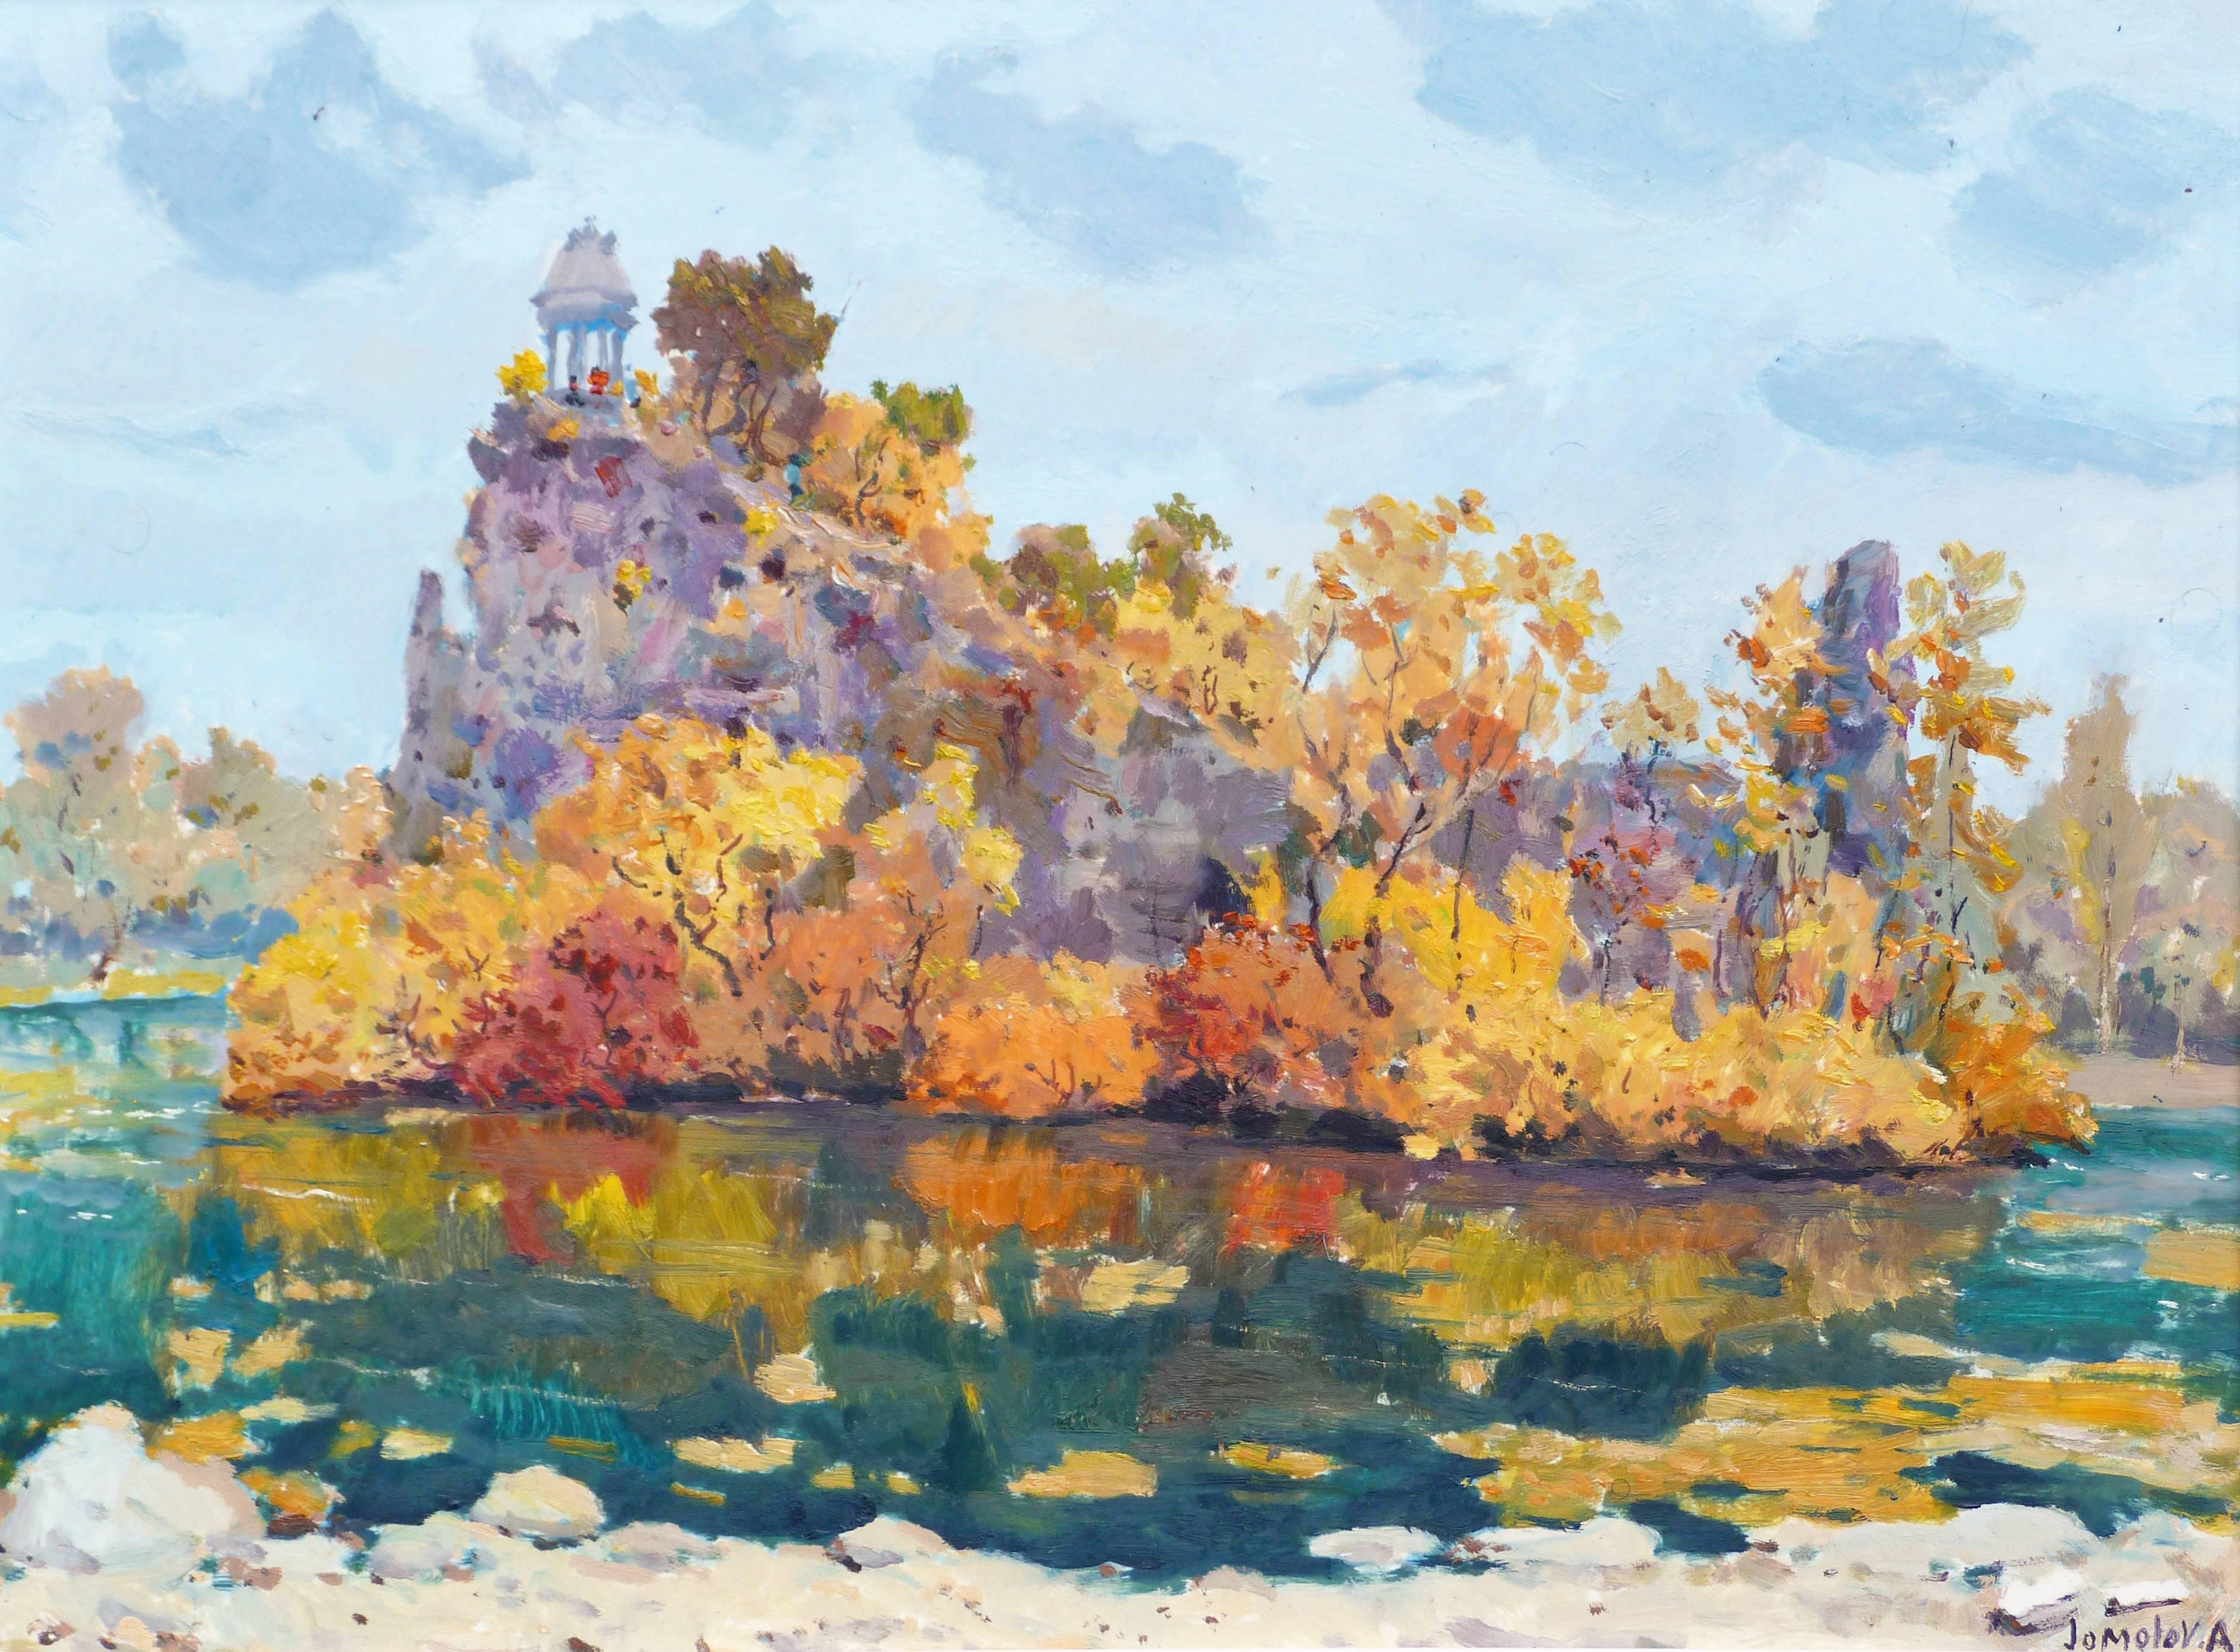 Jamolov Akmal Jan Landscape Painting - Autumn at the garden of Les Buttes Chaumont, In Paris